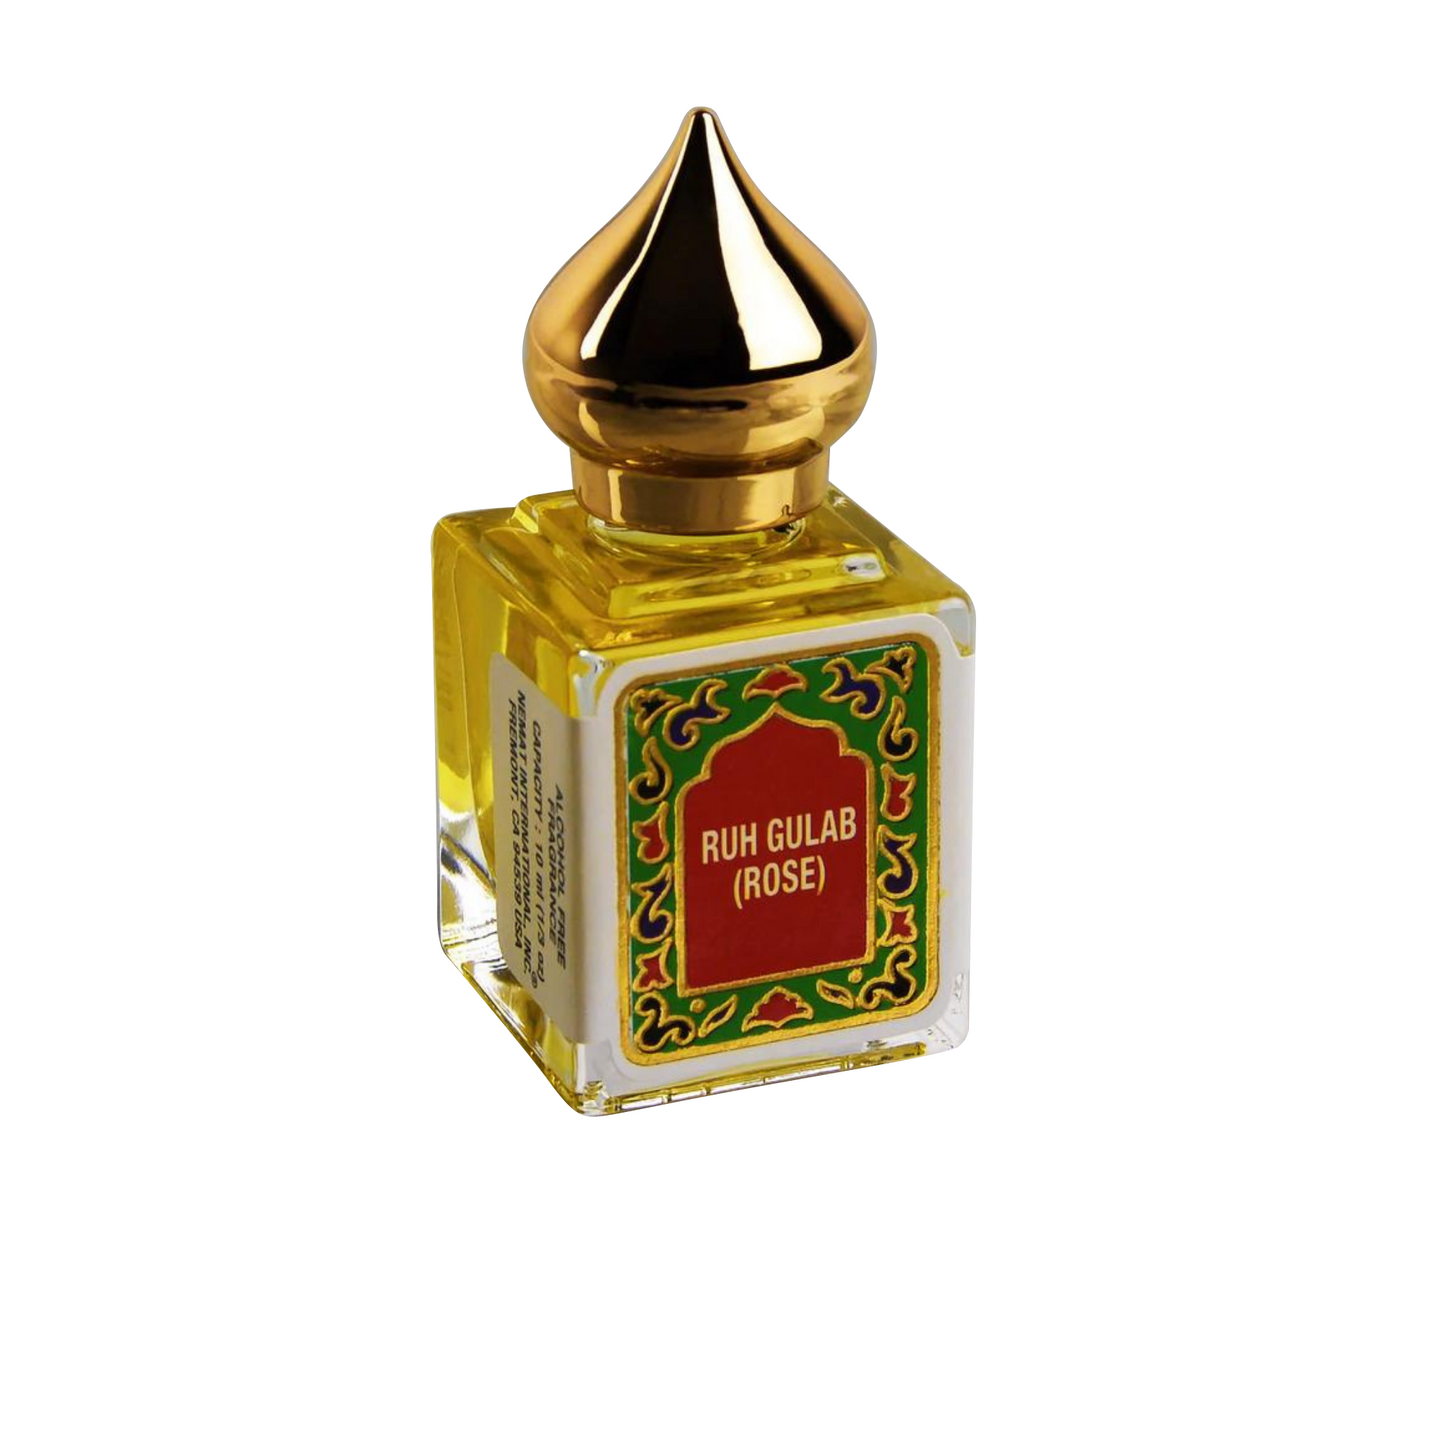 Primary image of Ruh Gulab (Rose) Fragrance Minaret Cap